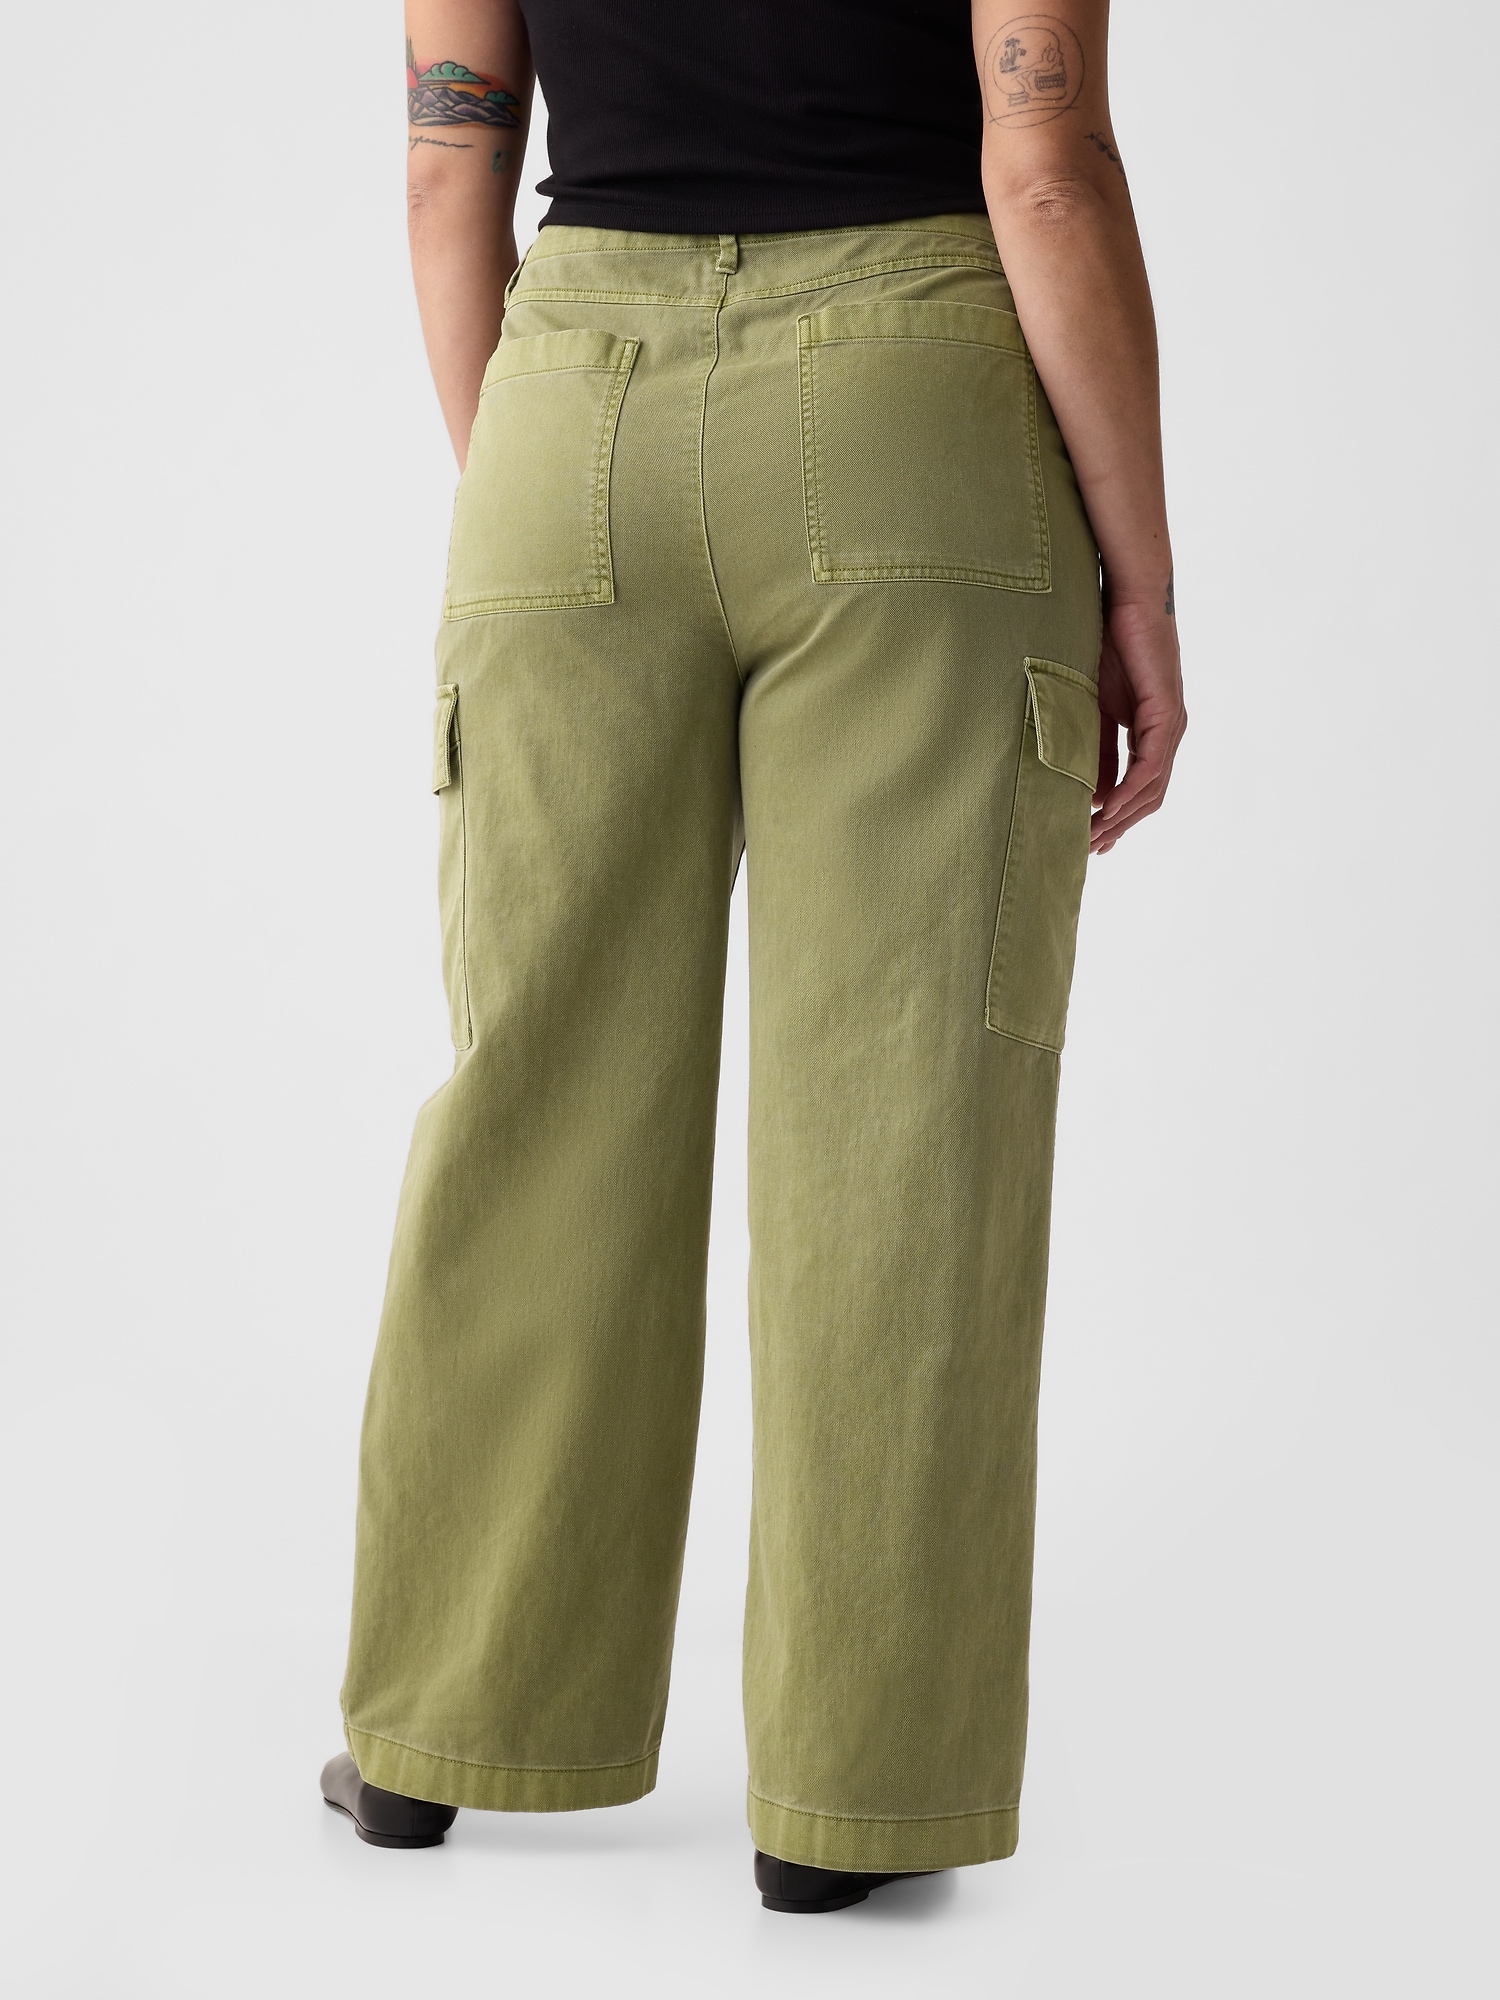 Fashion (Light Green)Cargo Pants Women High Waist Casual Khaki